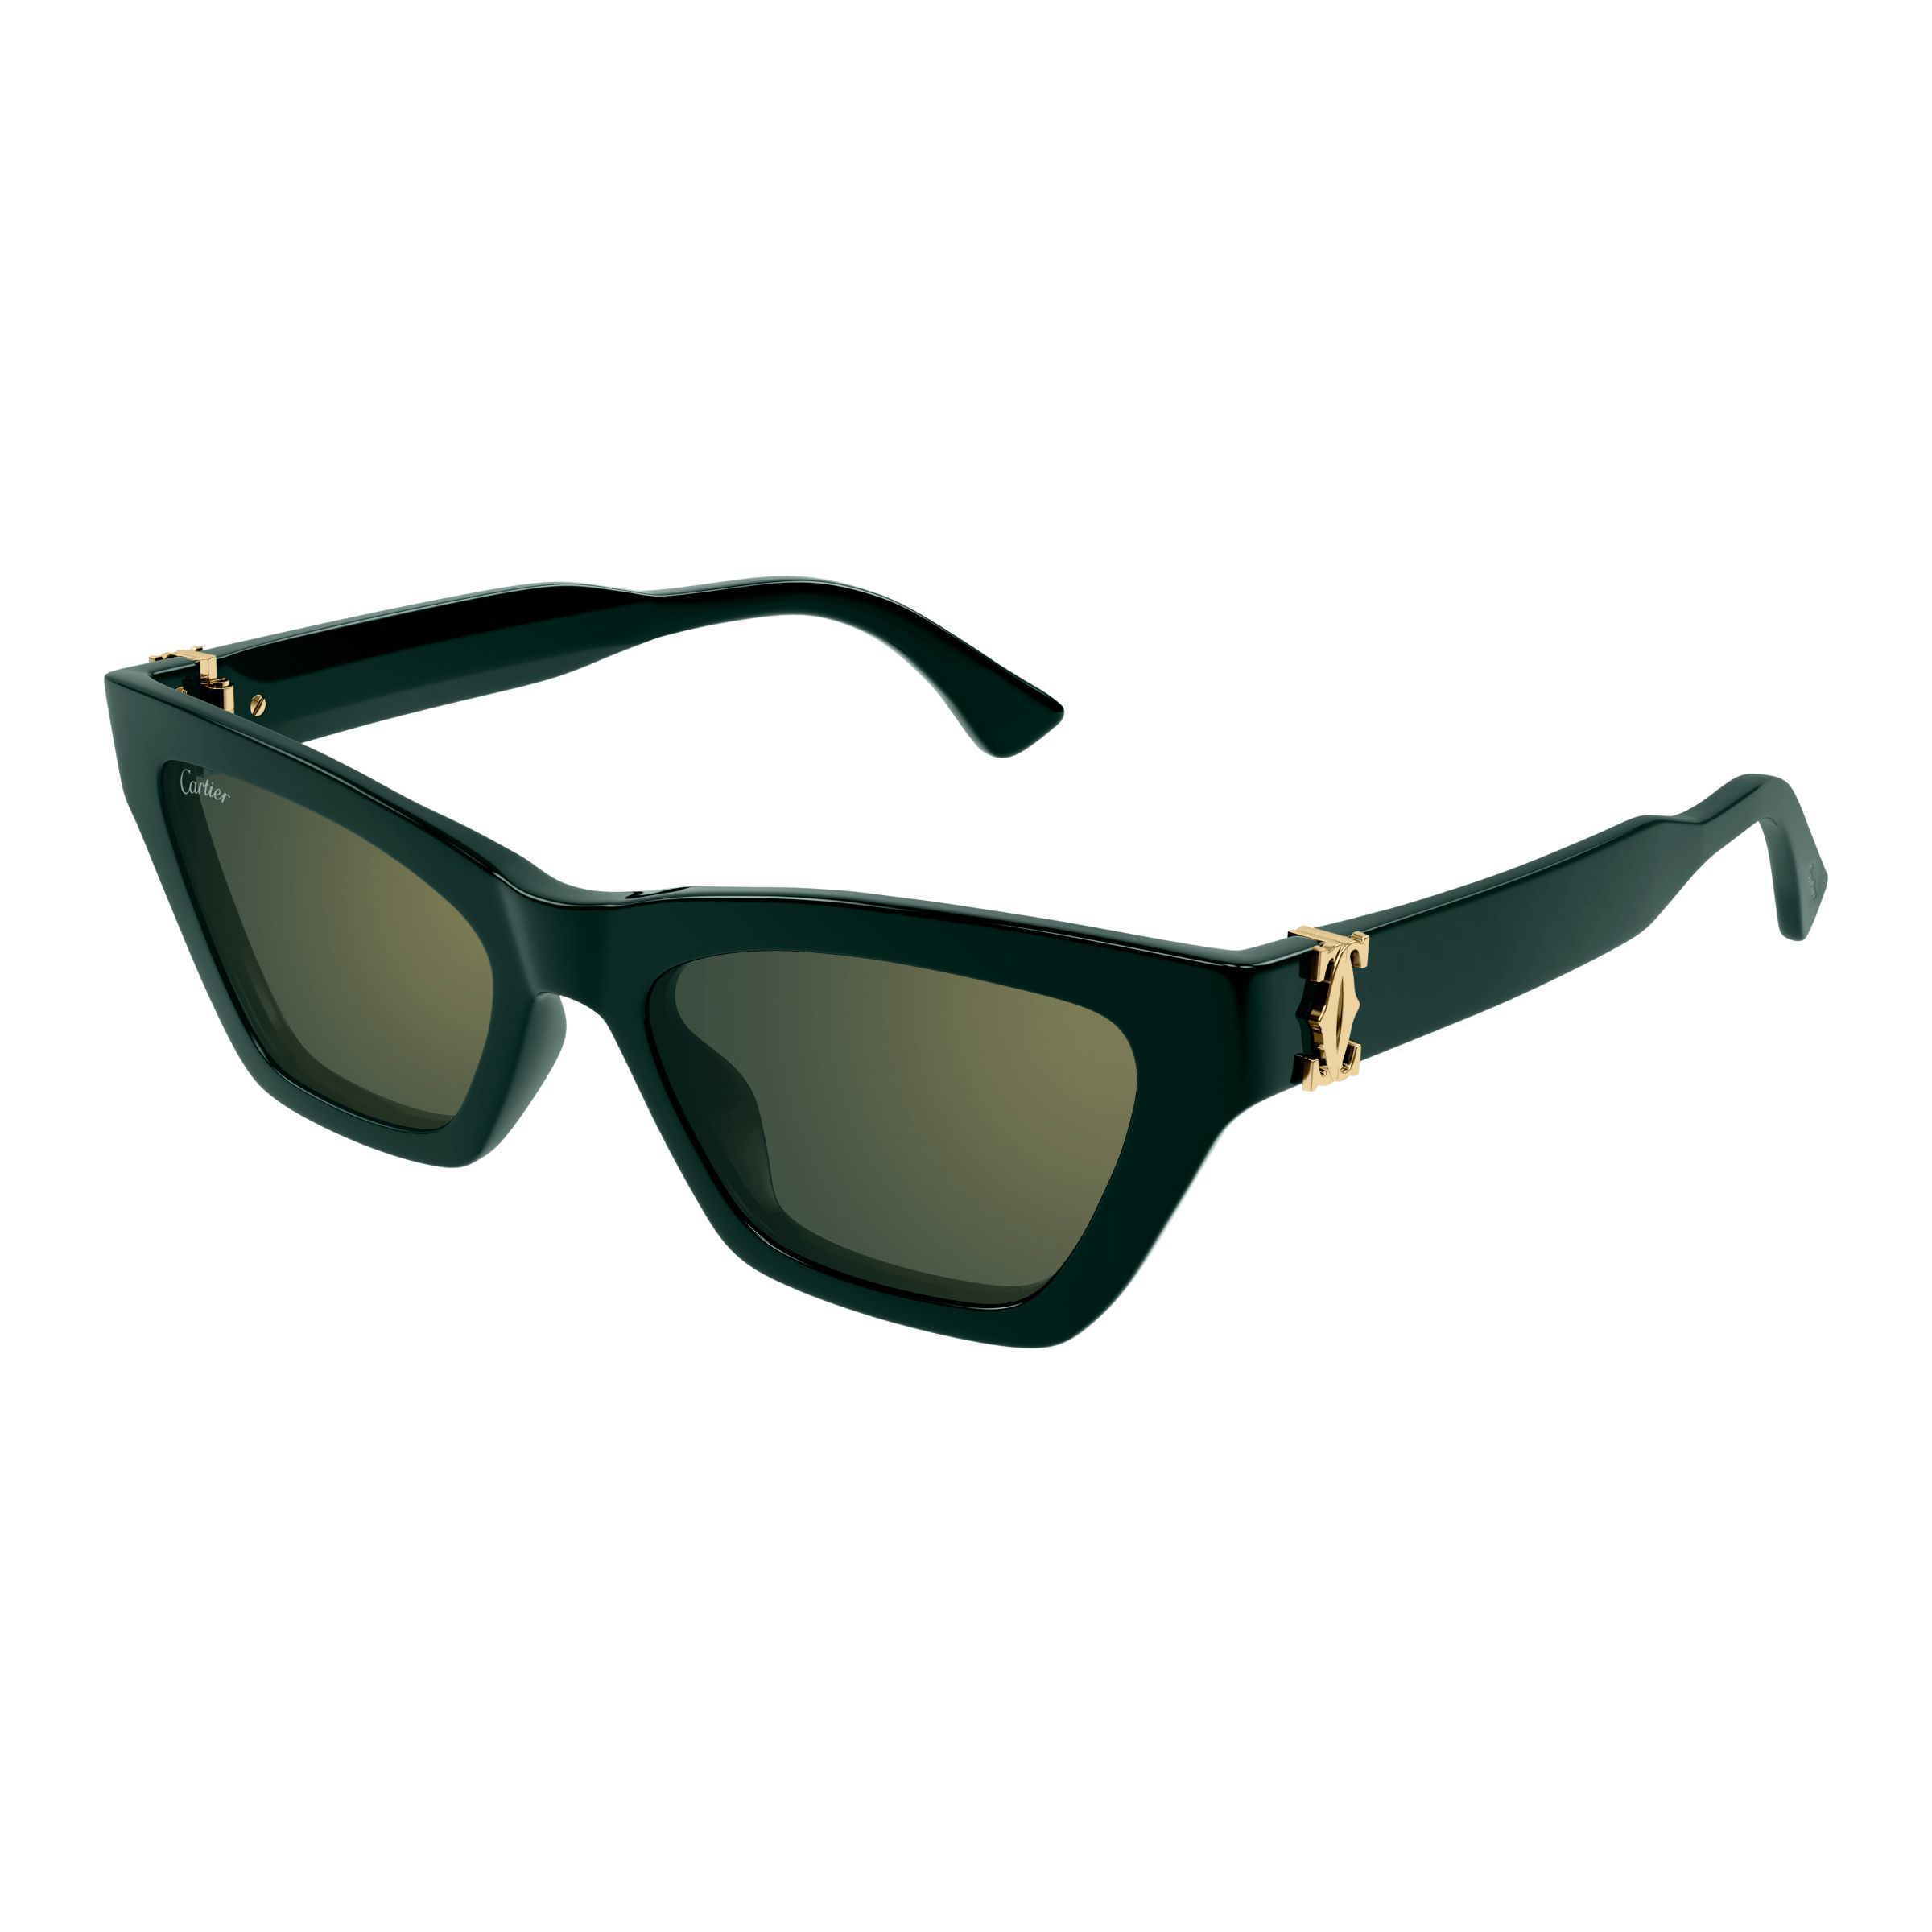 CT0437S Cateye Sunglasses 003 - size 53